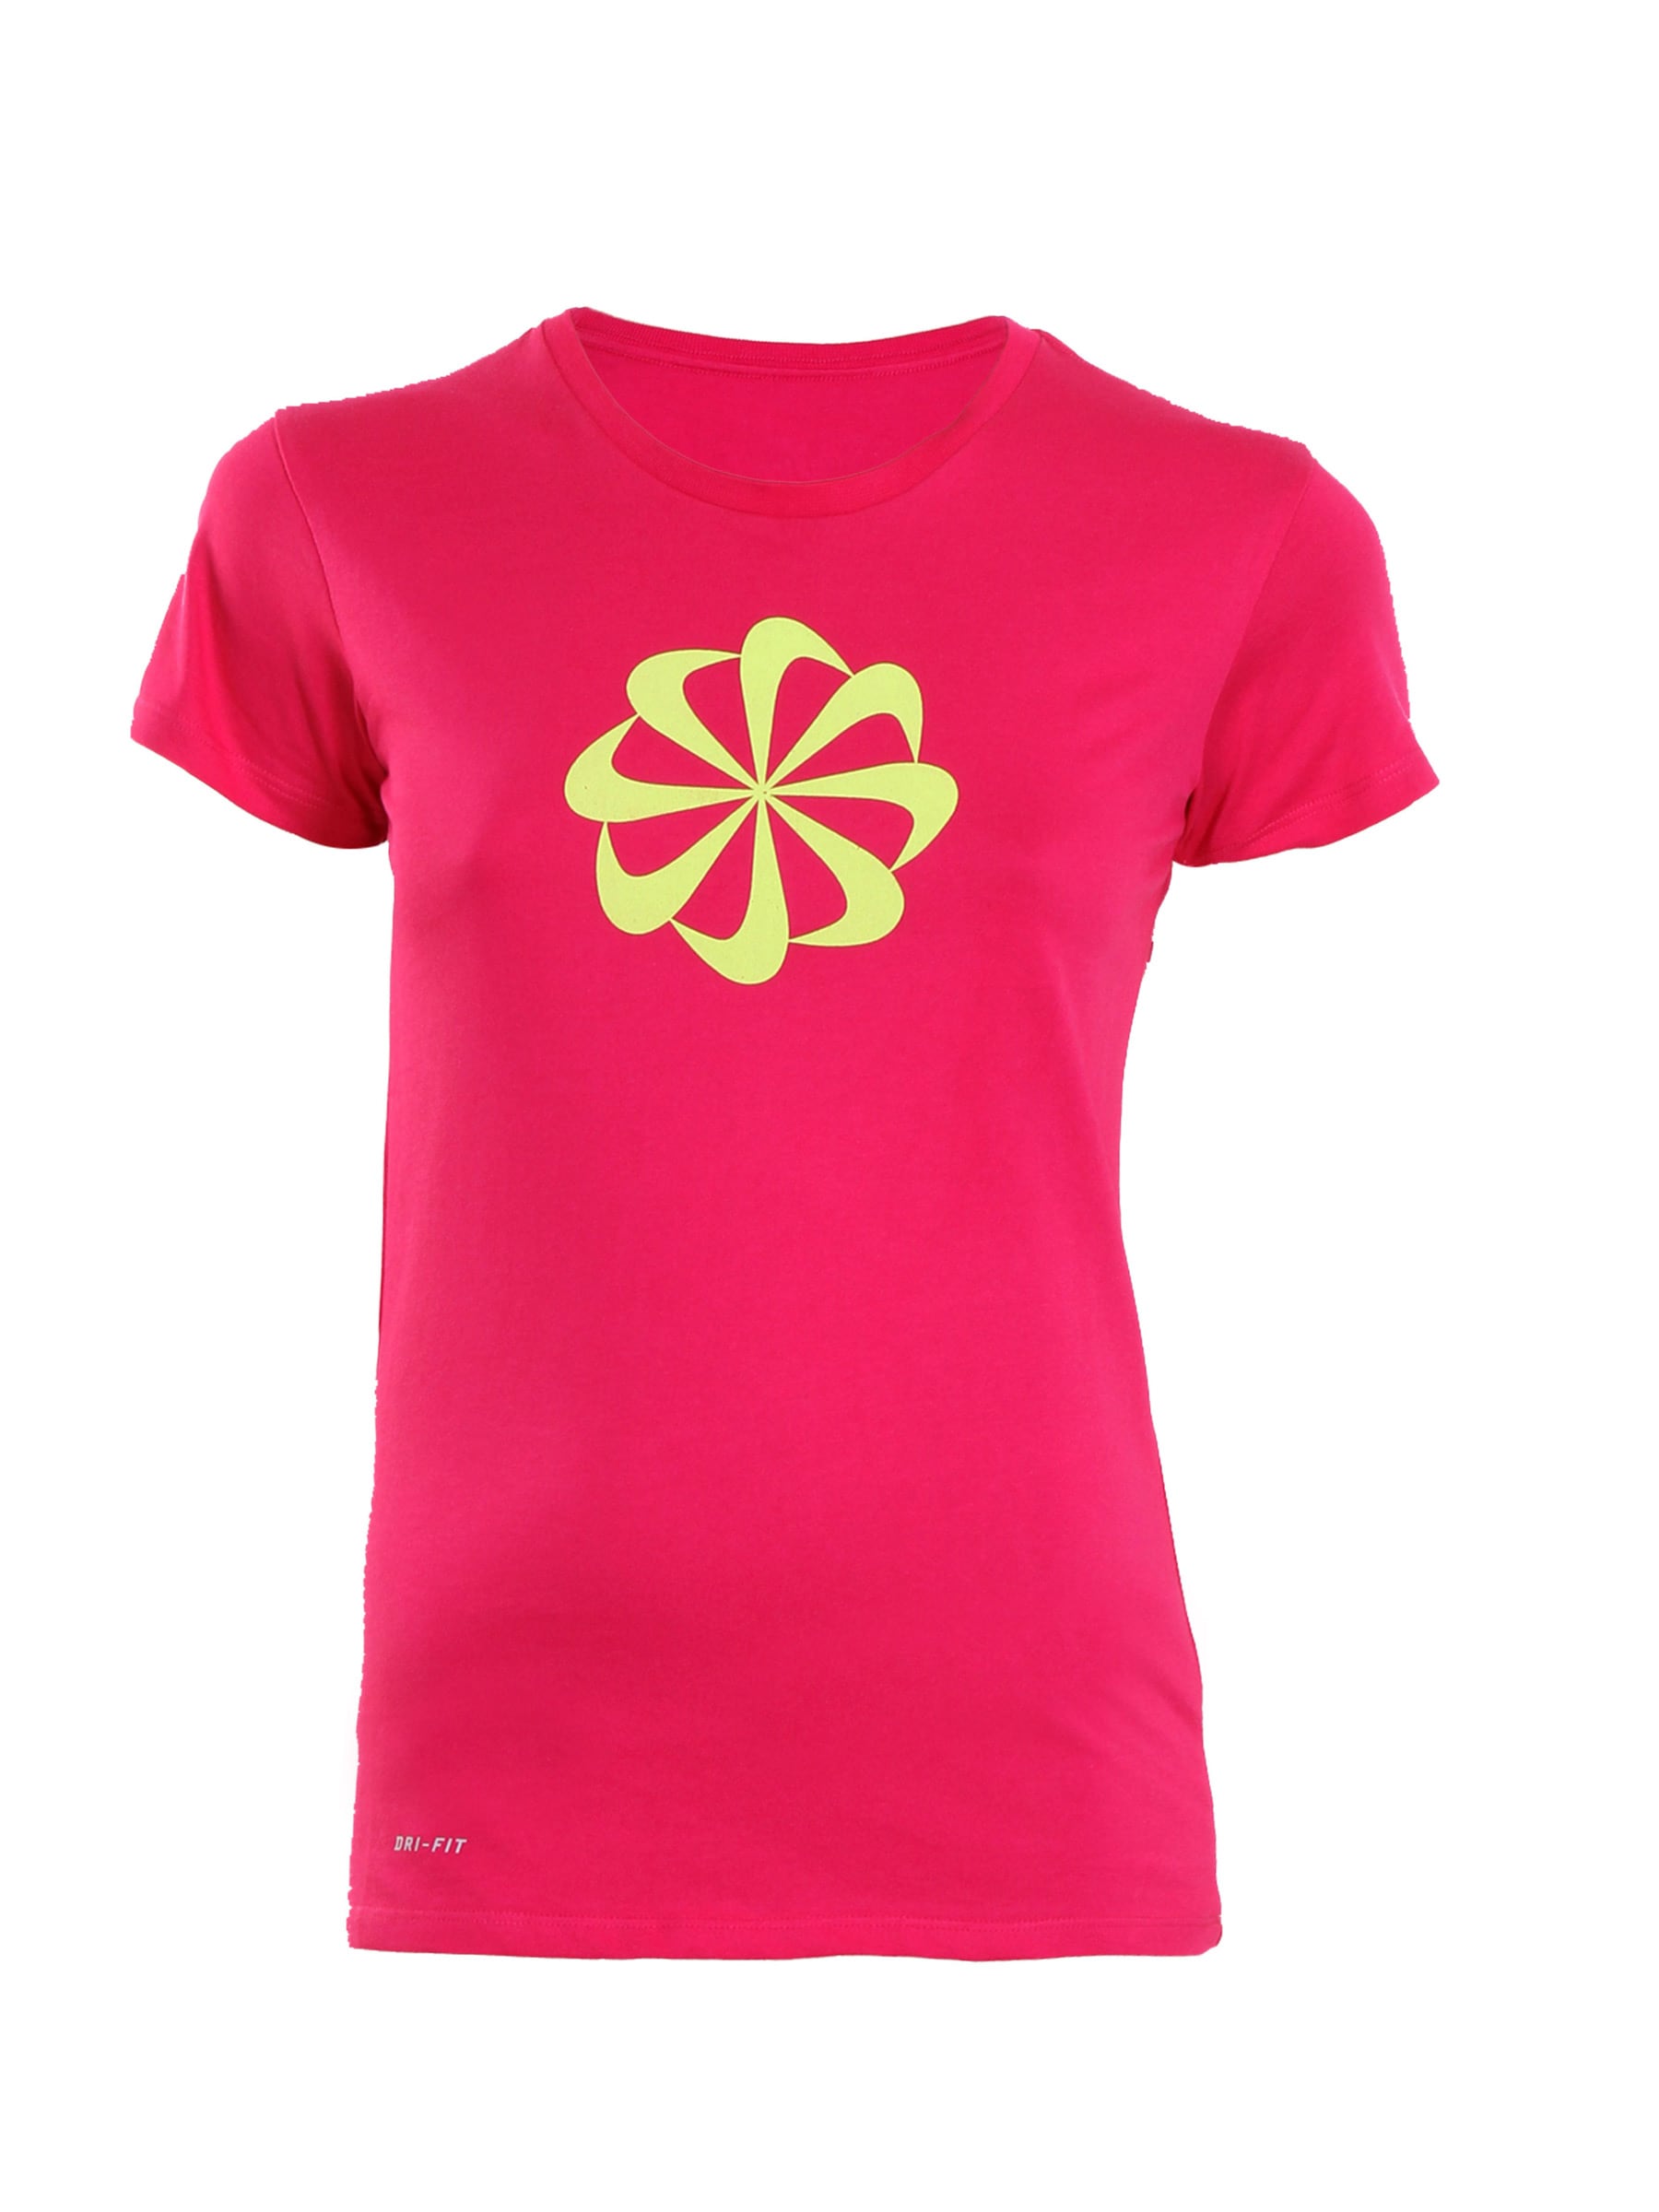 Nike Women Cruiser Pink T-shirt